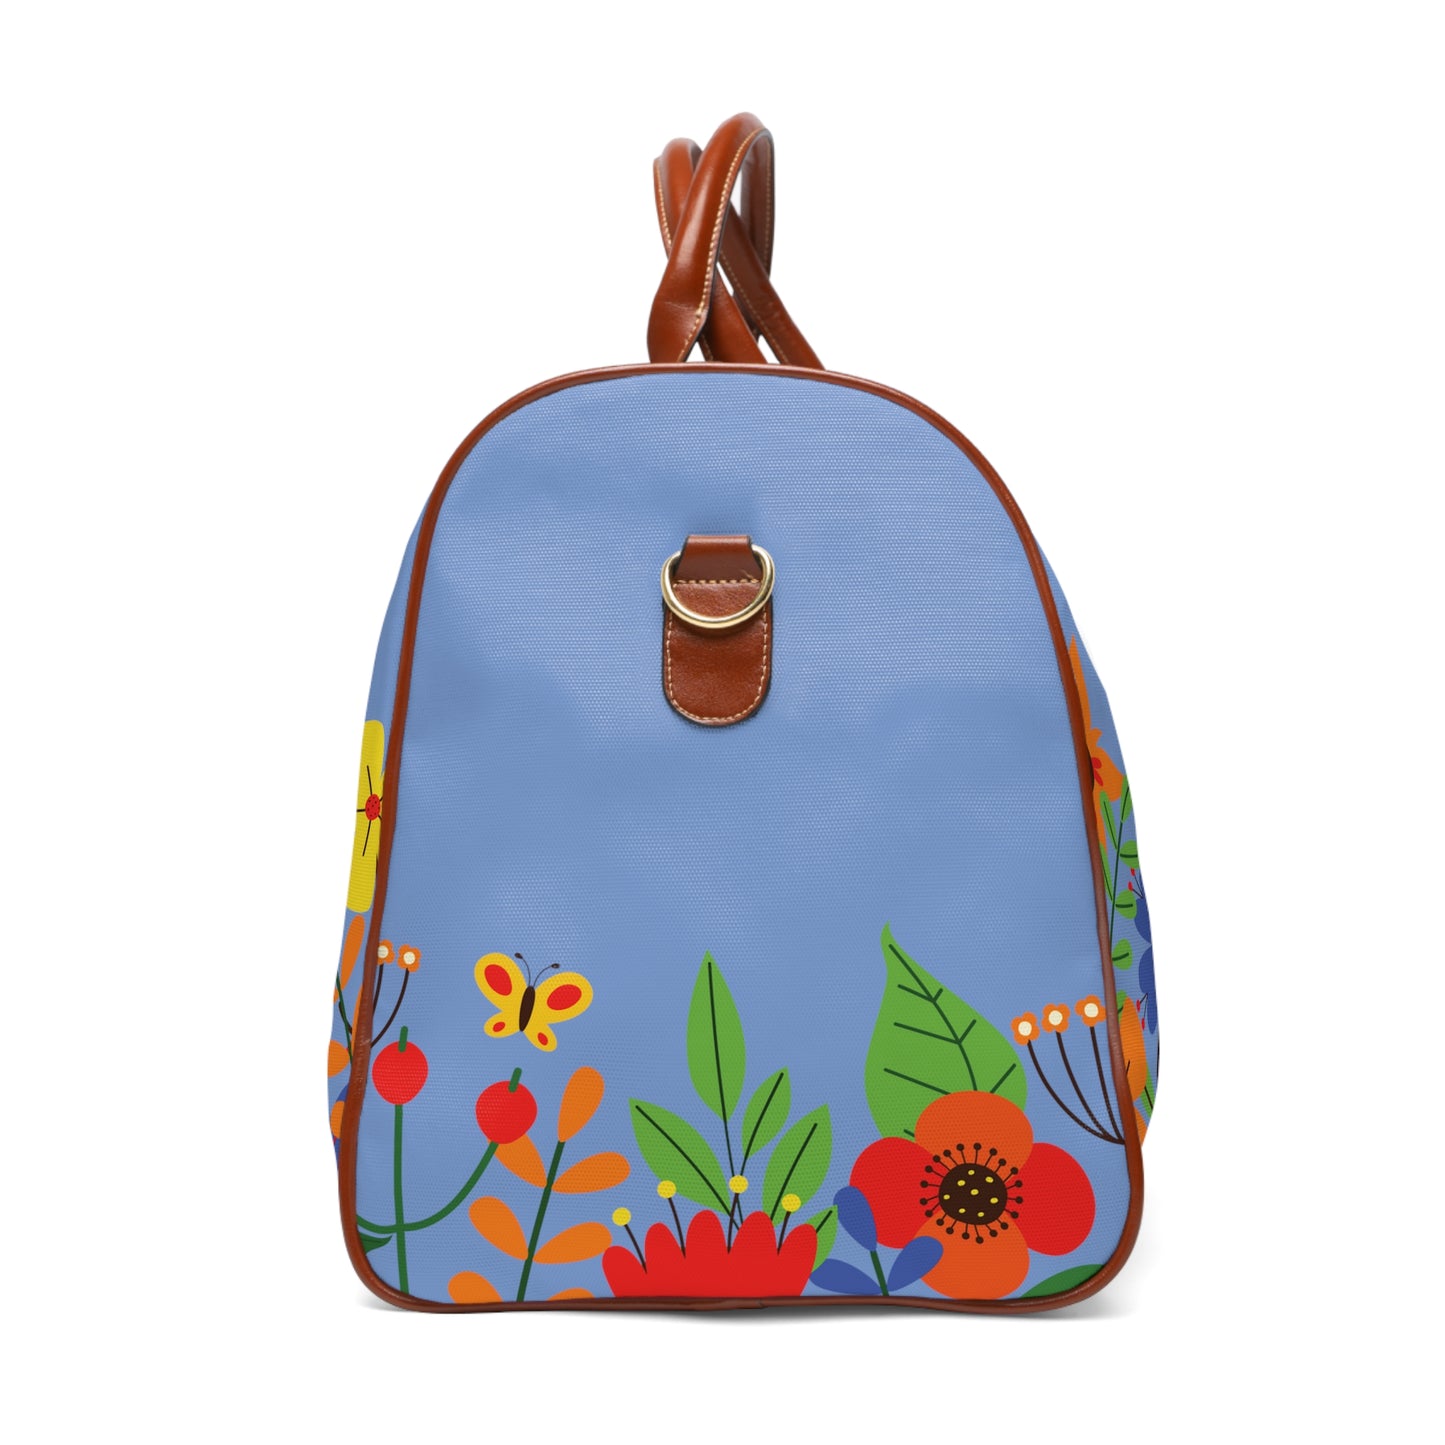 Bright Summer flowers - Fennel Flower 74a6ff - Waterproof Travel Bag